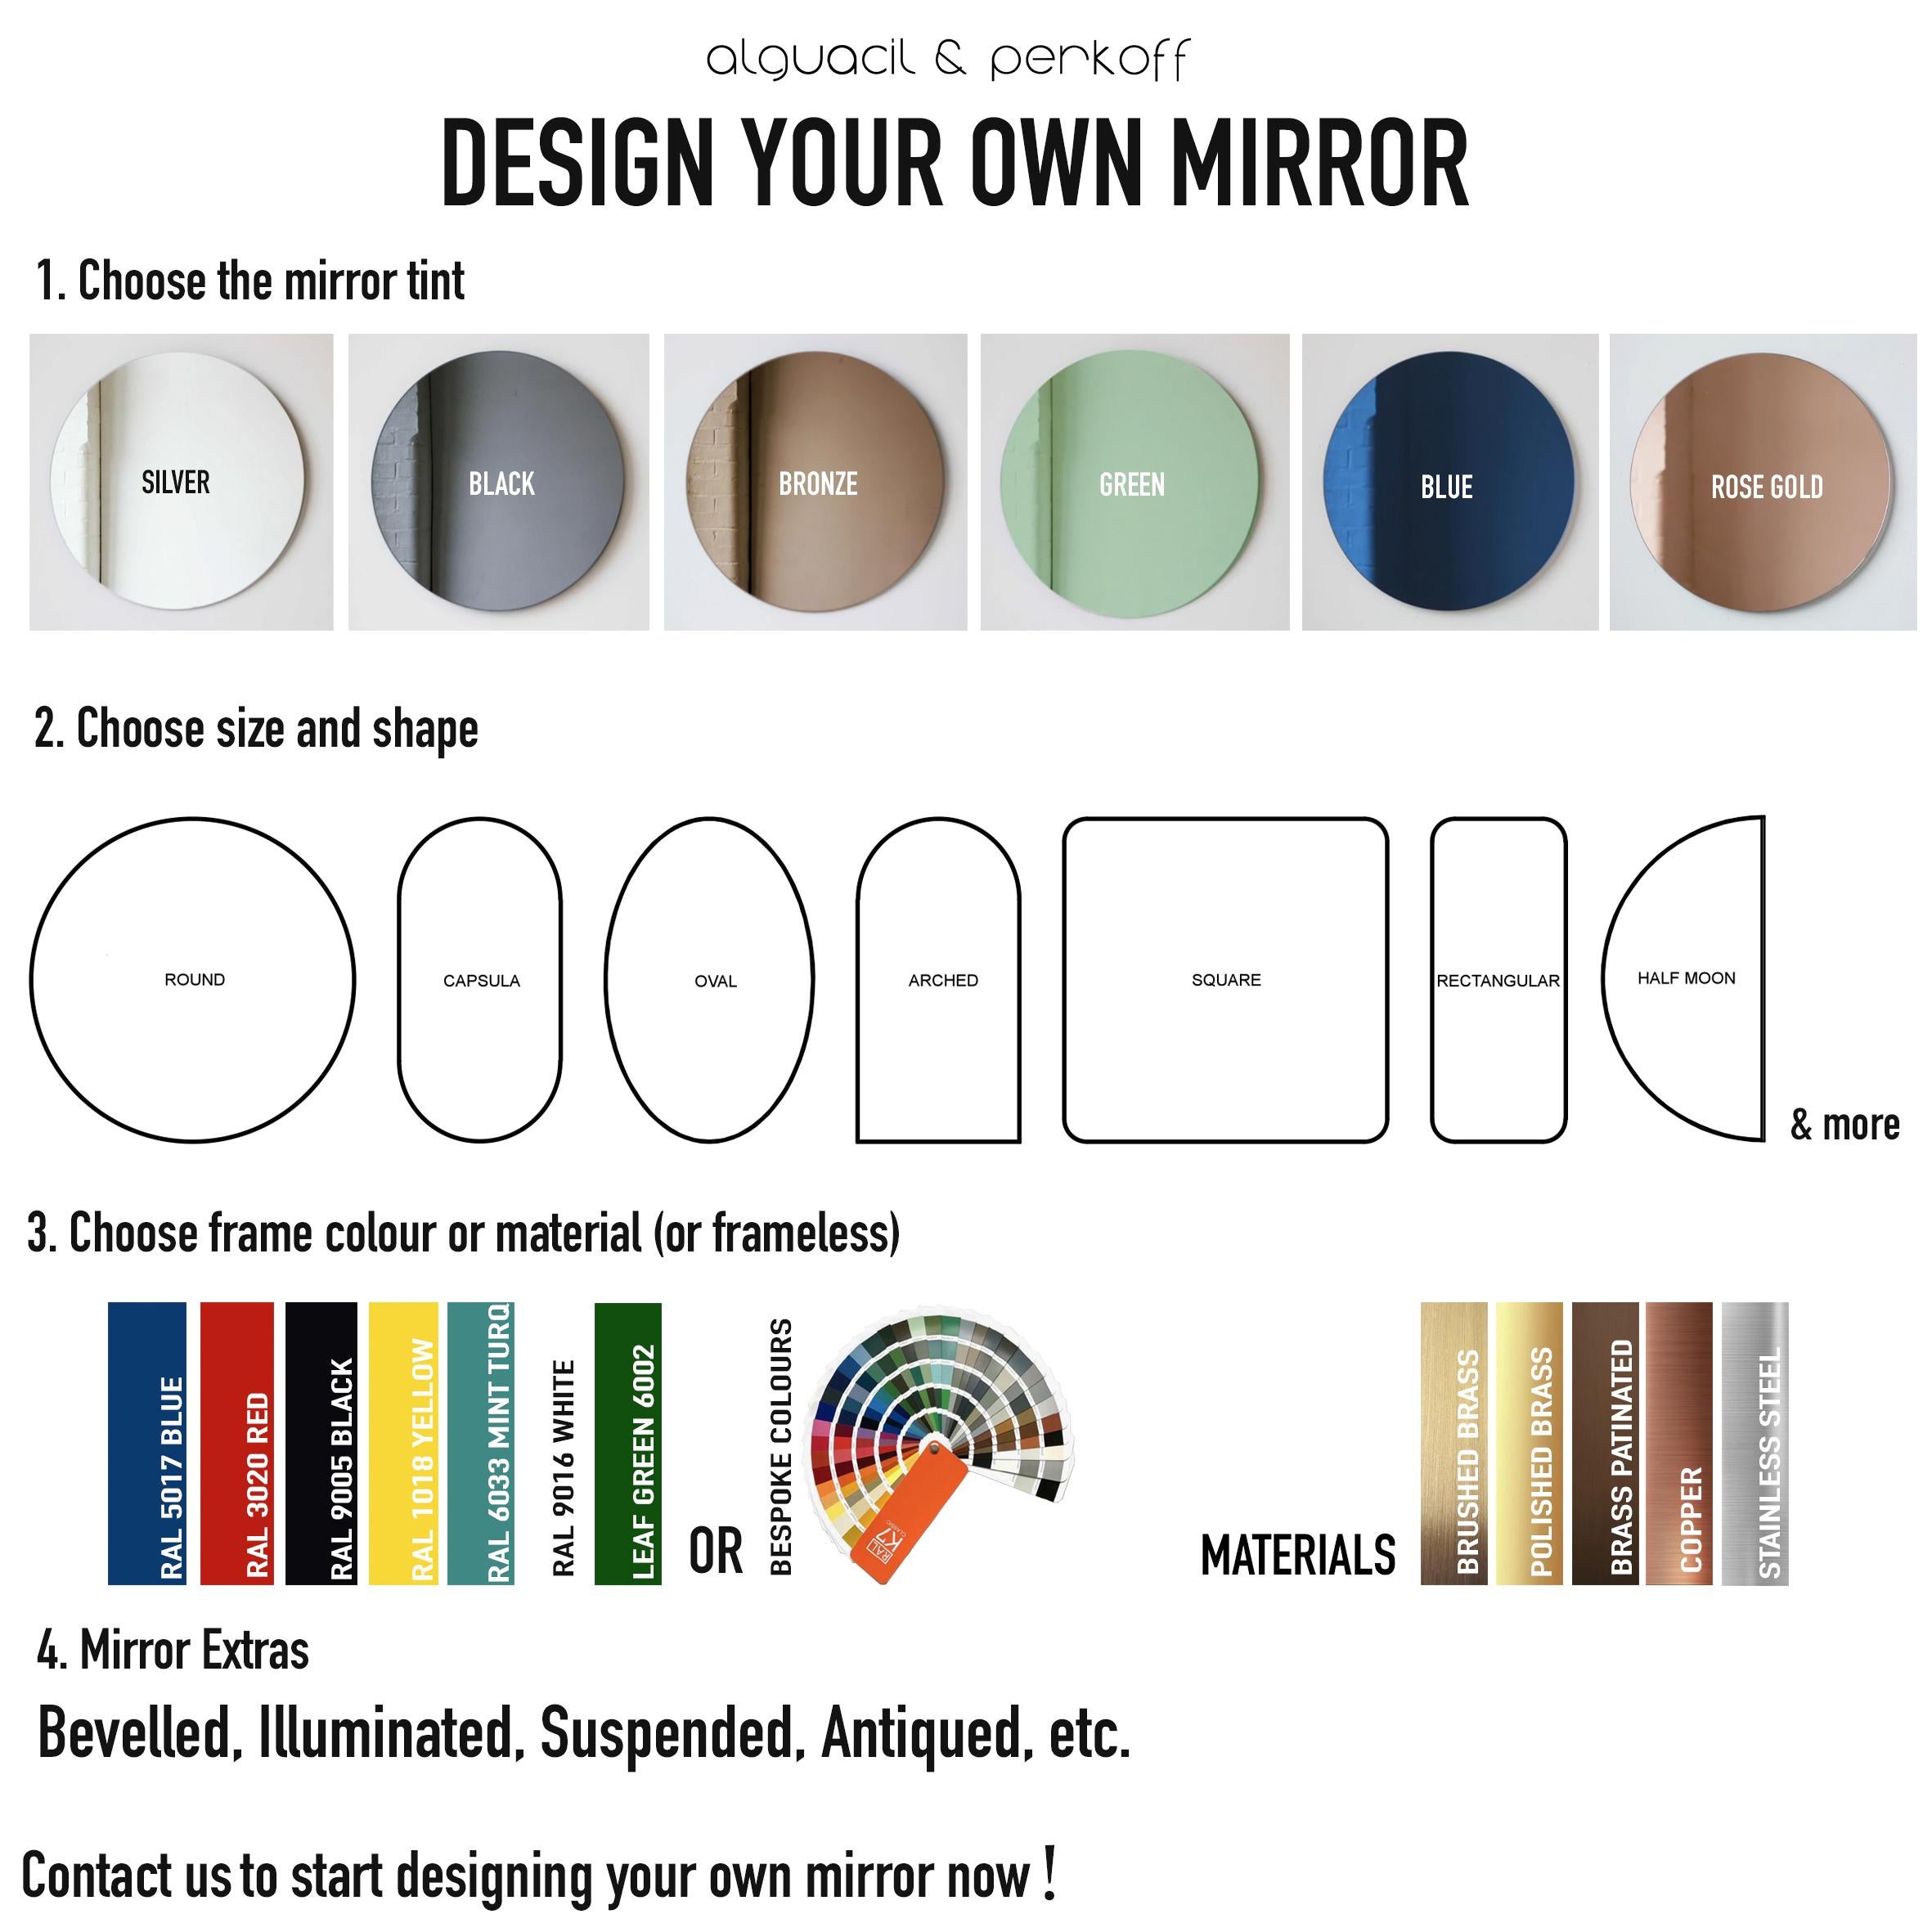 Orbis Black Tinted Circular Minimalist Mirror with White Frame - Small 4